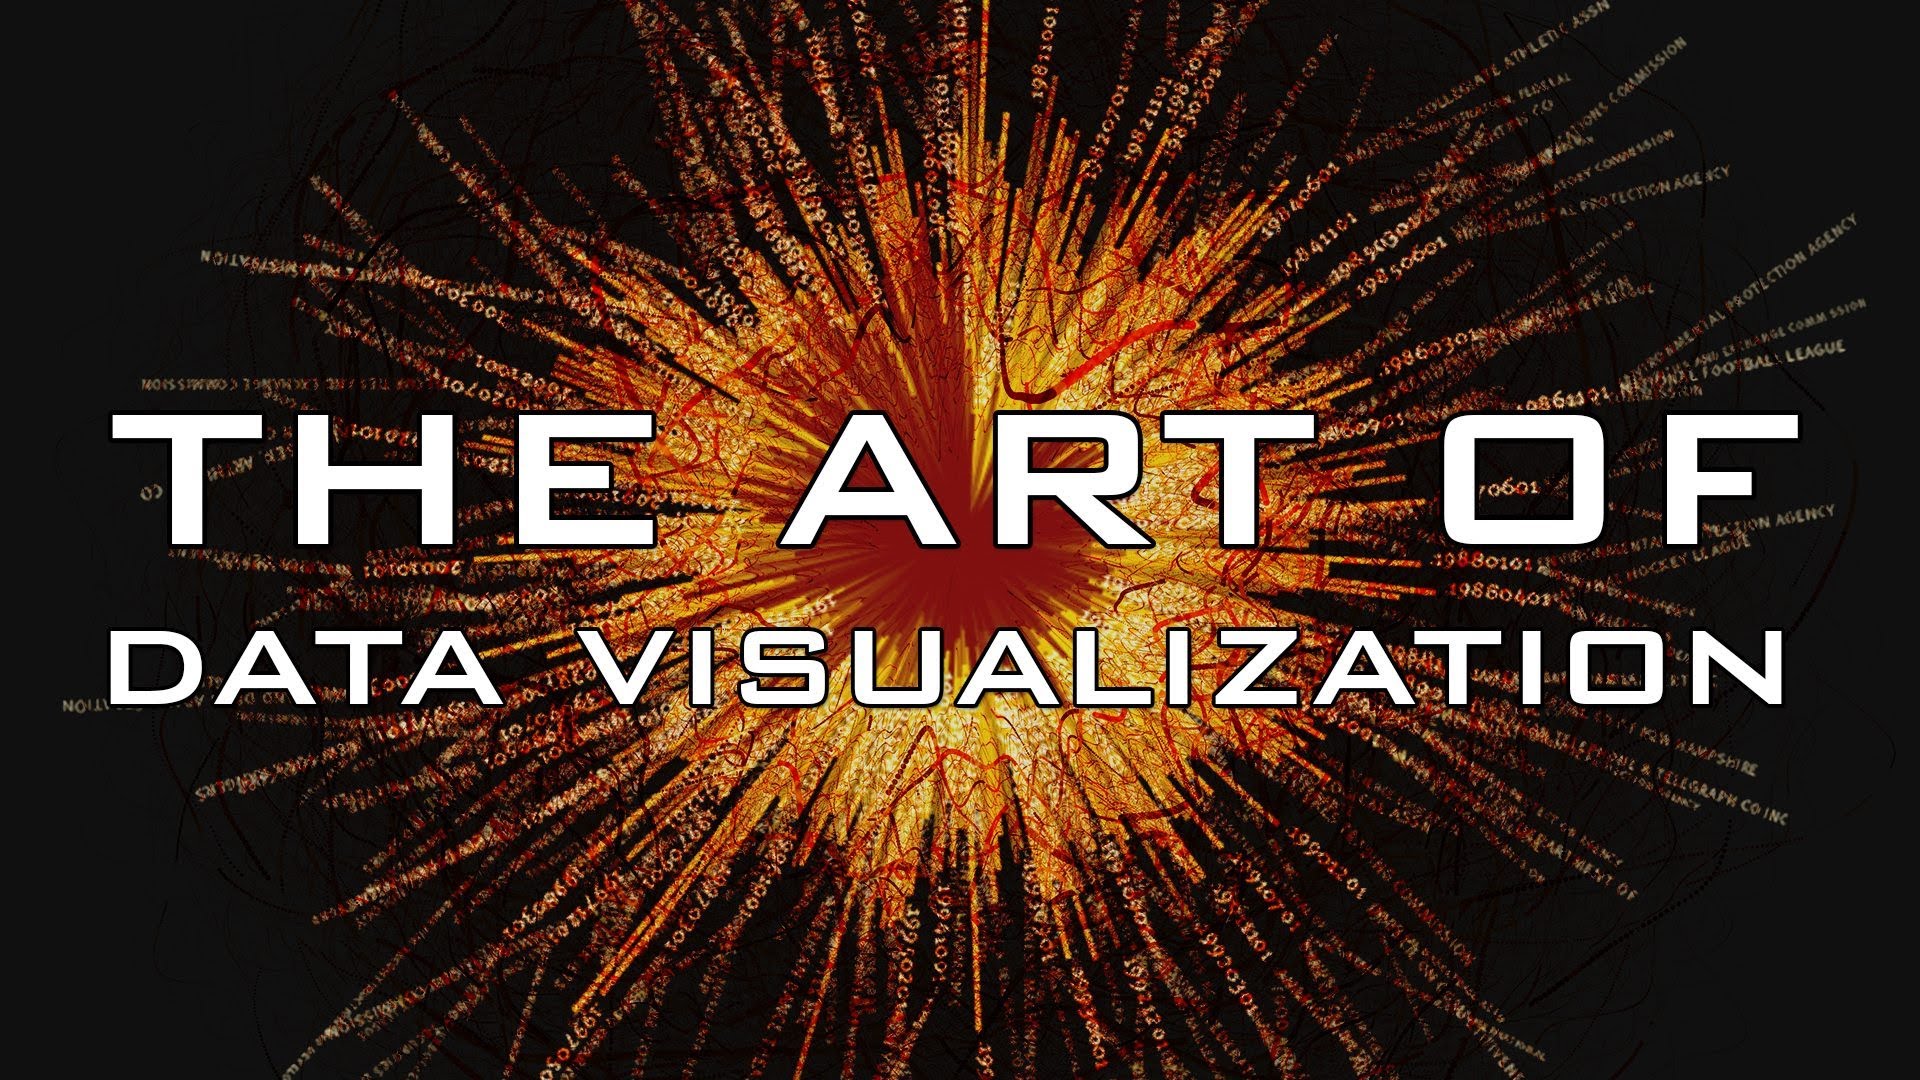 The Art of Data Visualization | Off Book | PBS Digital Studios